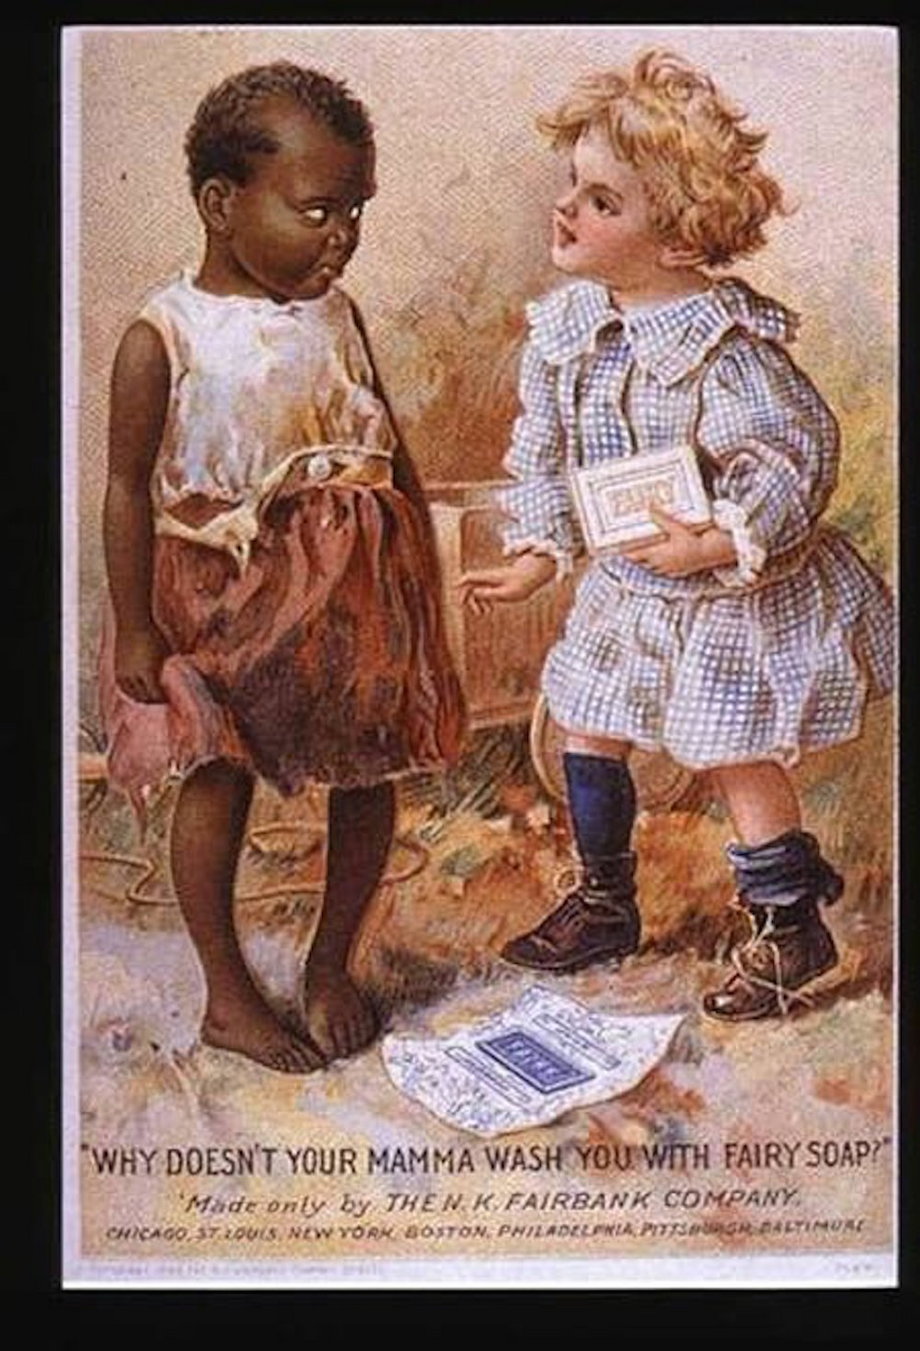 NK Fairbank Co. depicted black children as unclean.